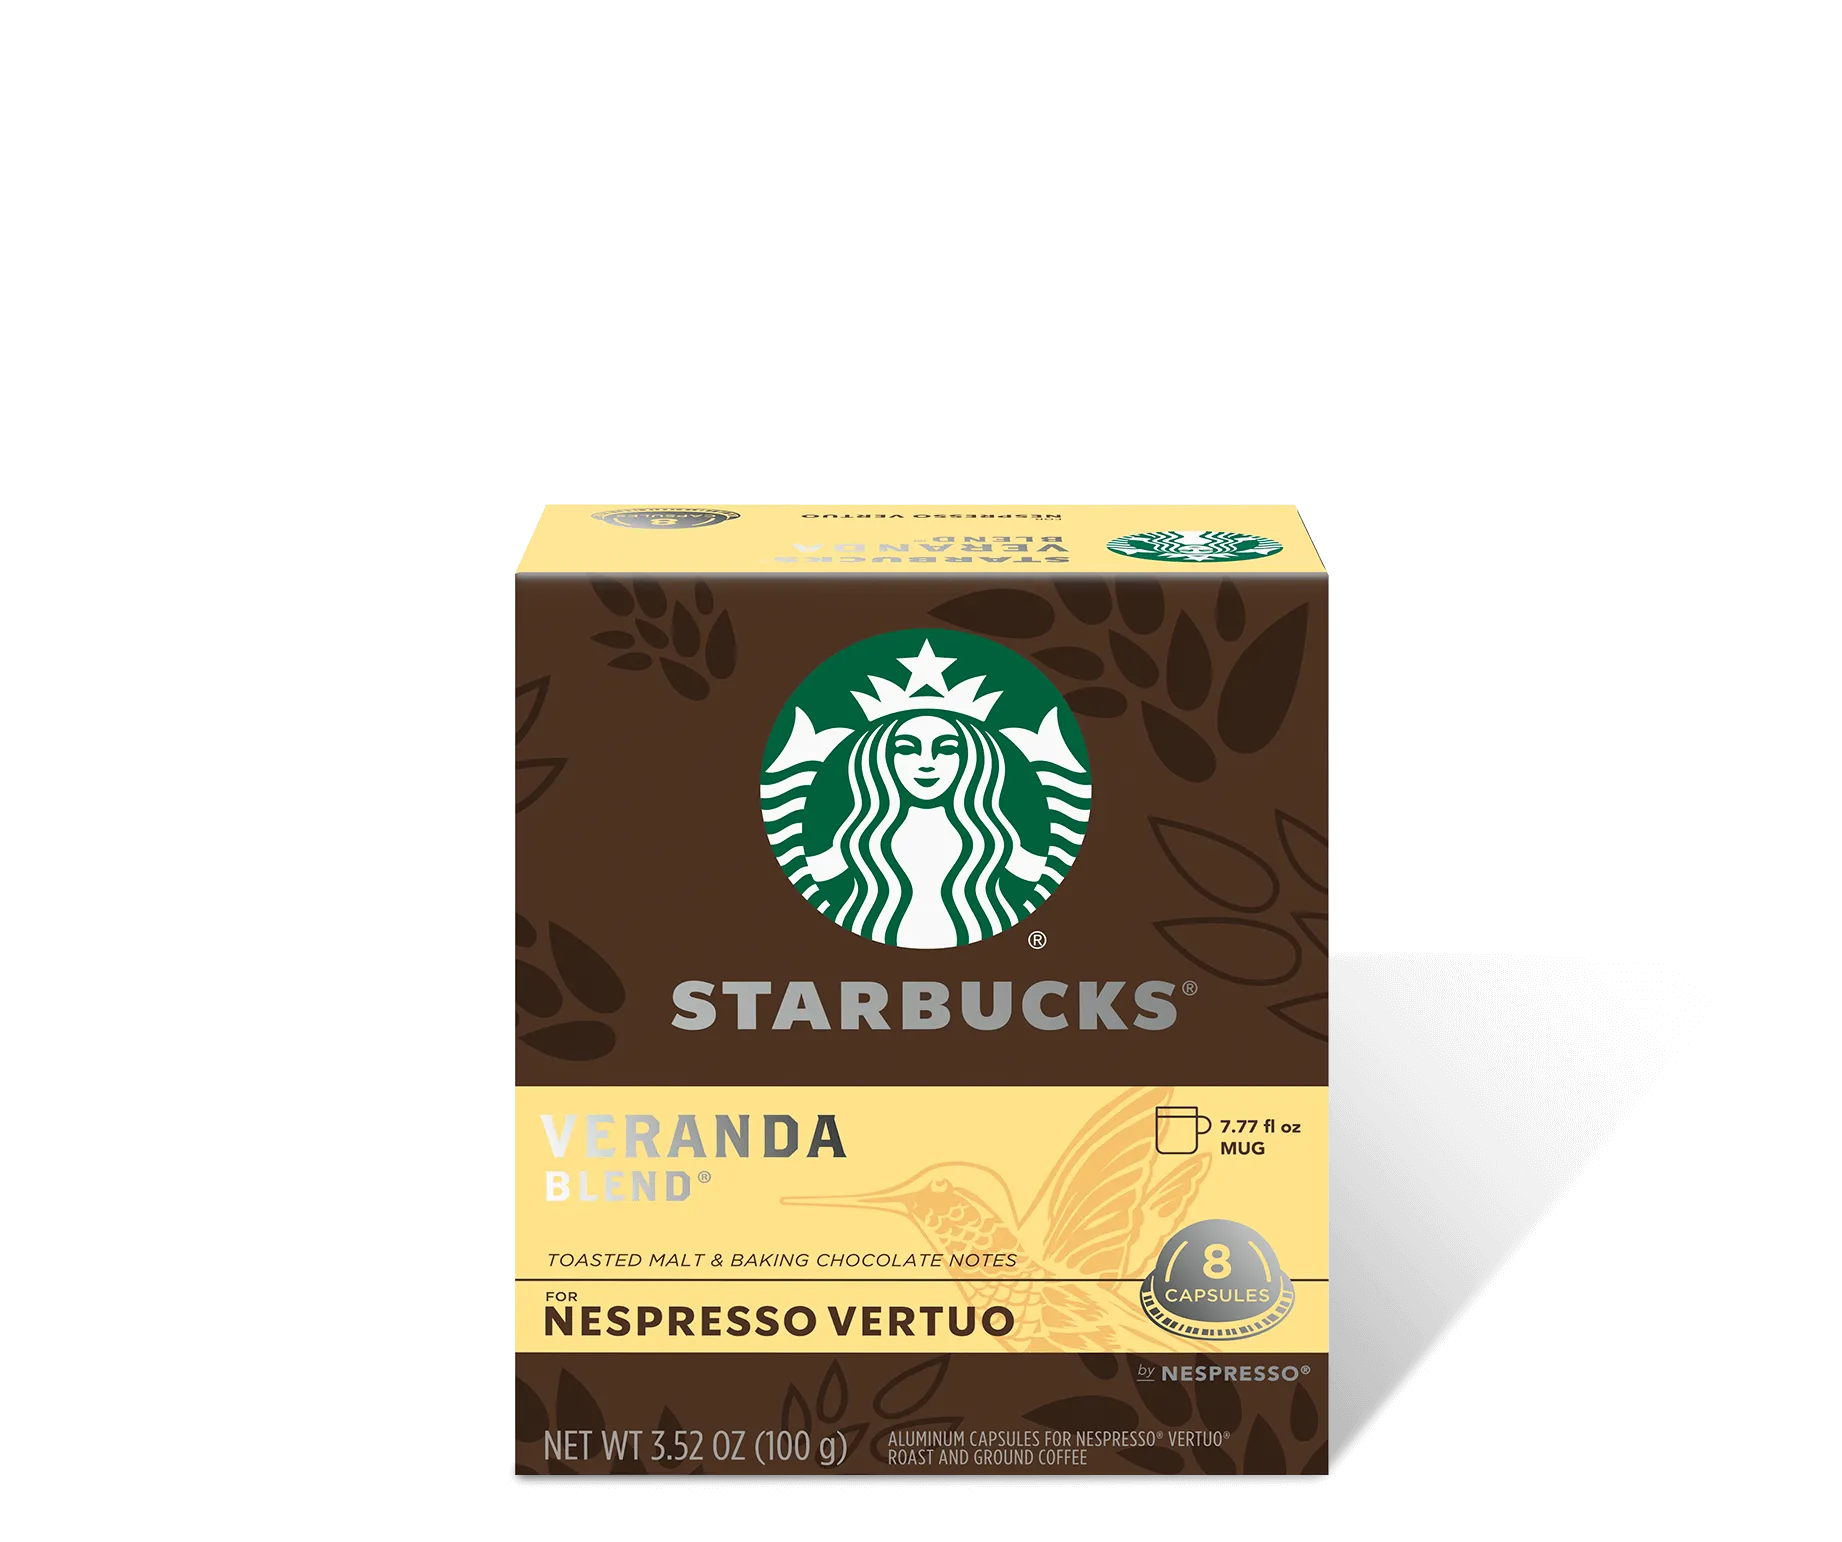 Starbucks Blonde Espresso Roast - 12 Capsules for Dolce Gusto for £3.70.